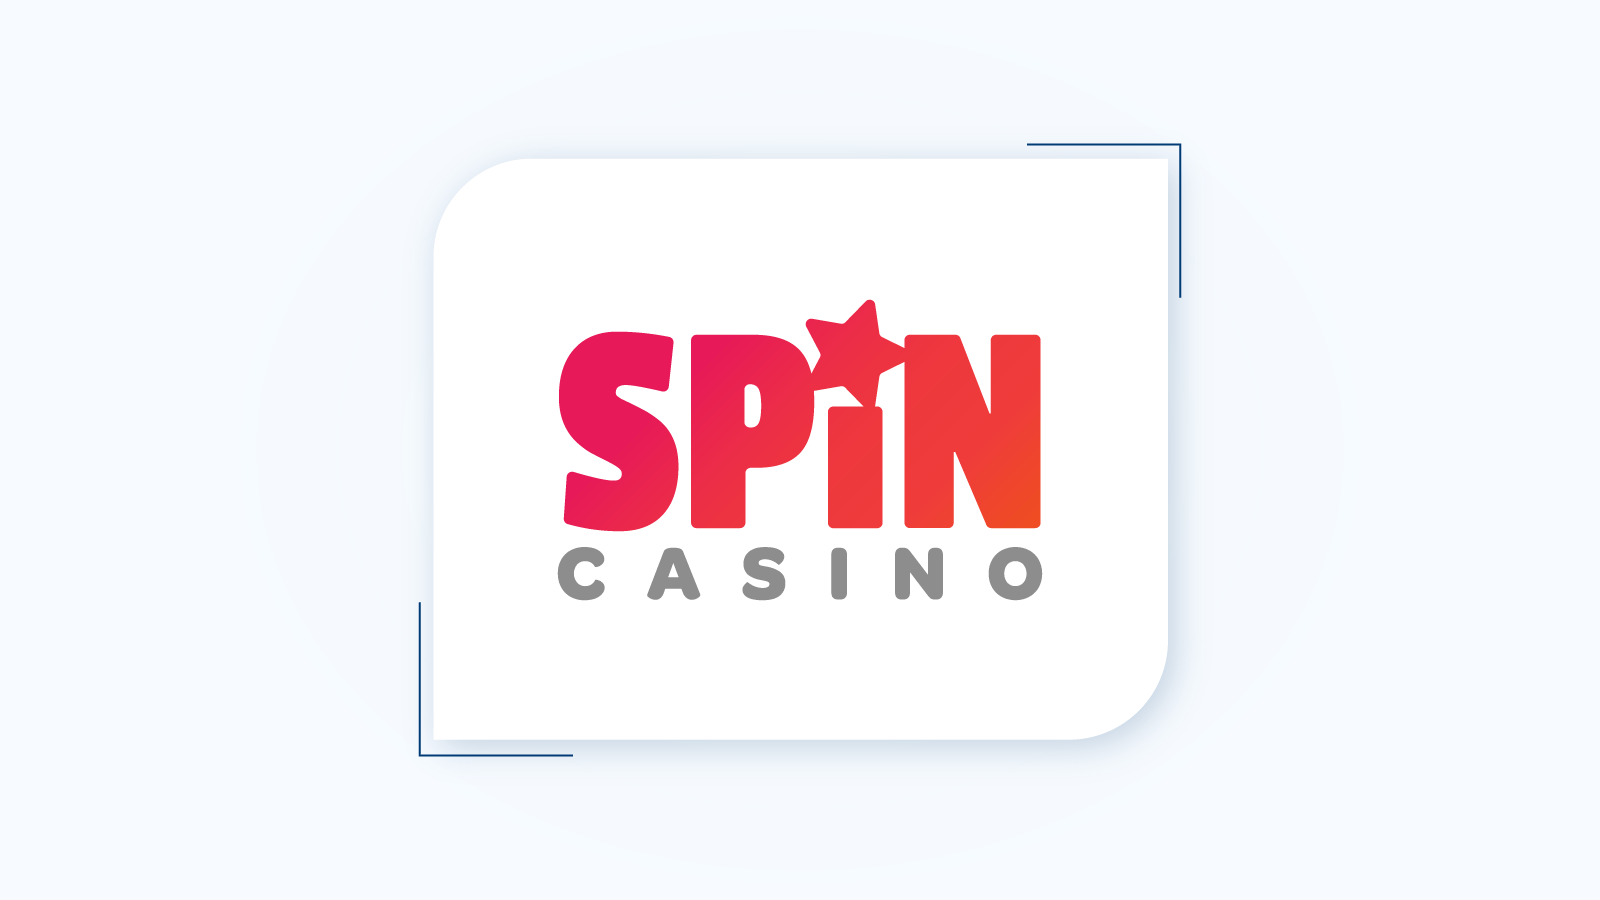 Spin Casino best $1 deposit casino in Ontario